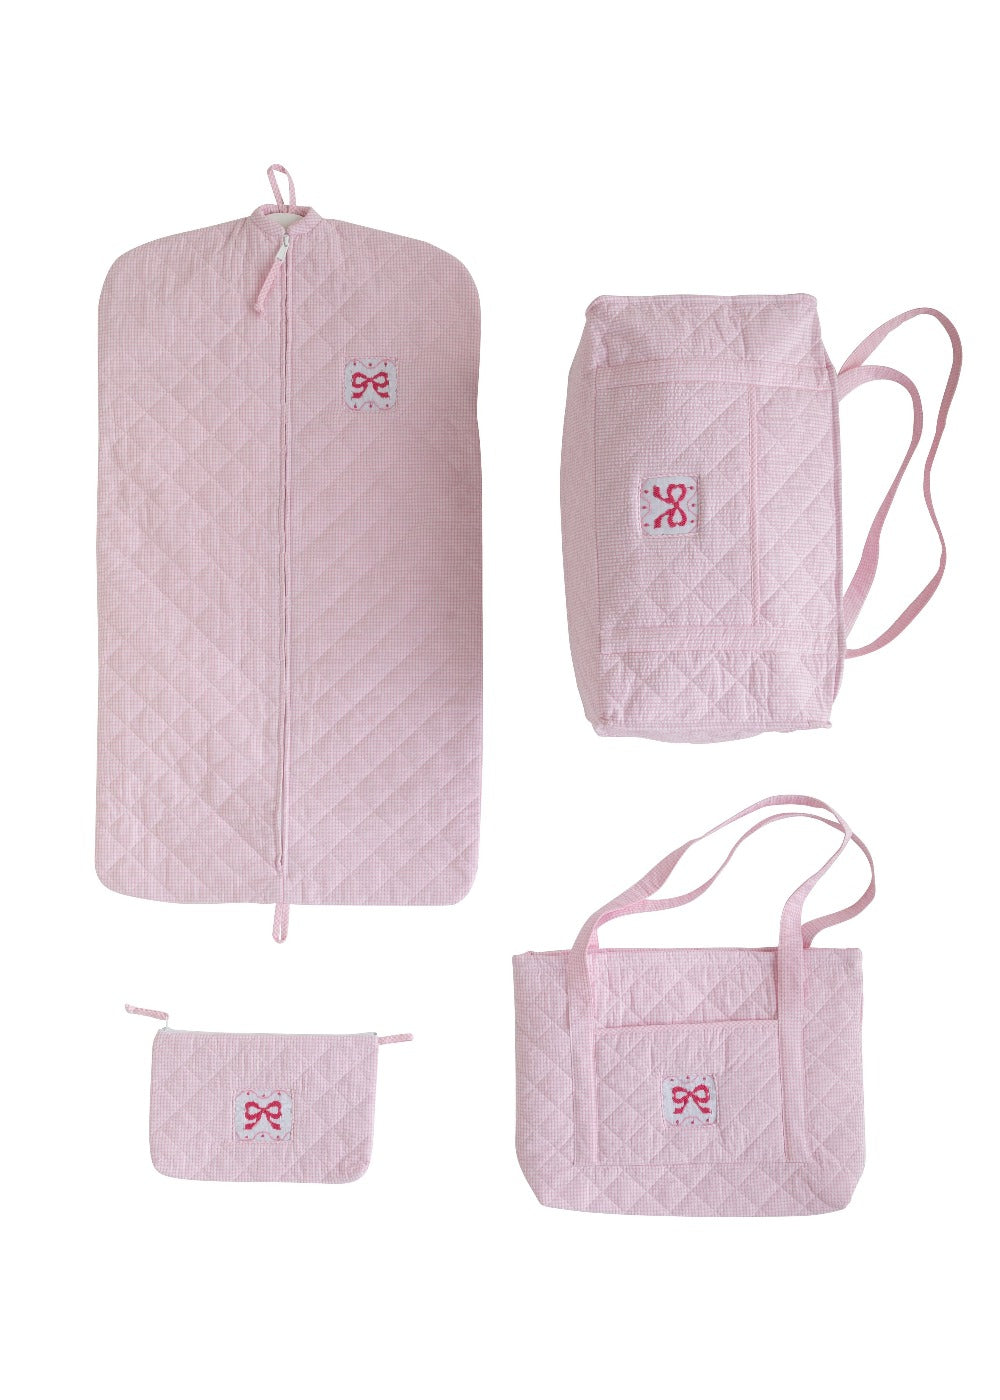 seguridadindustrialcr classic children's luggage pink bow full set